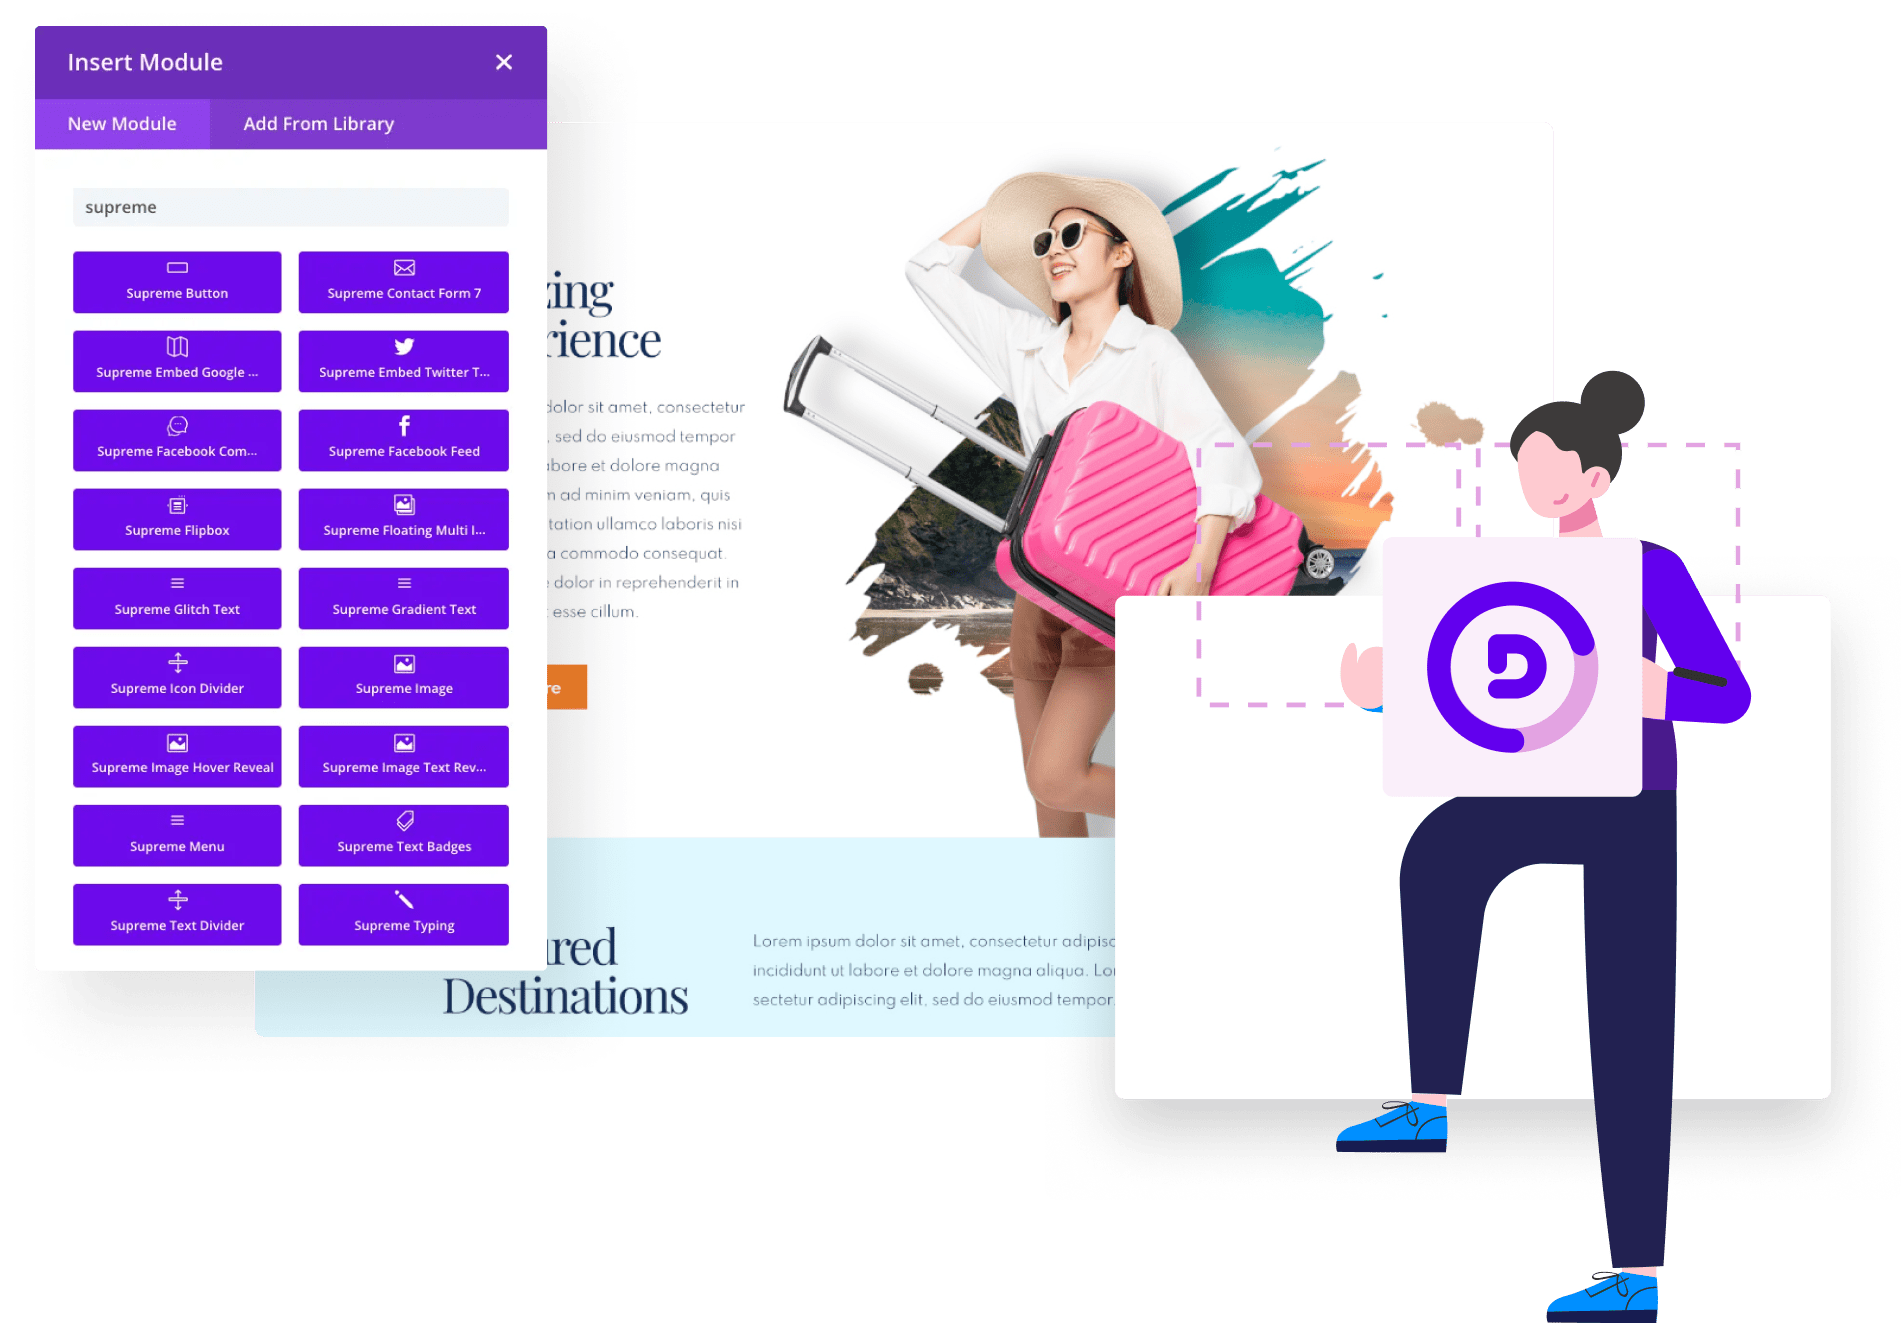 Divi Supreme - Custom and creative Divi modules to help you build amazing websites